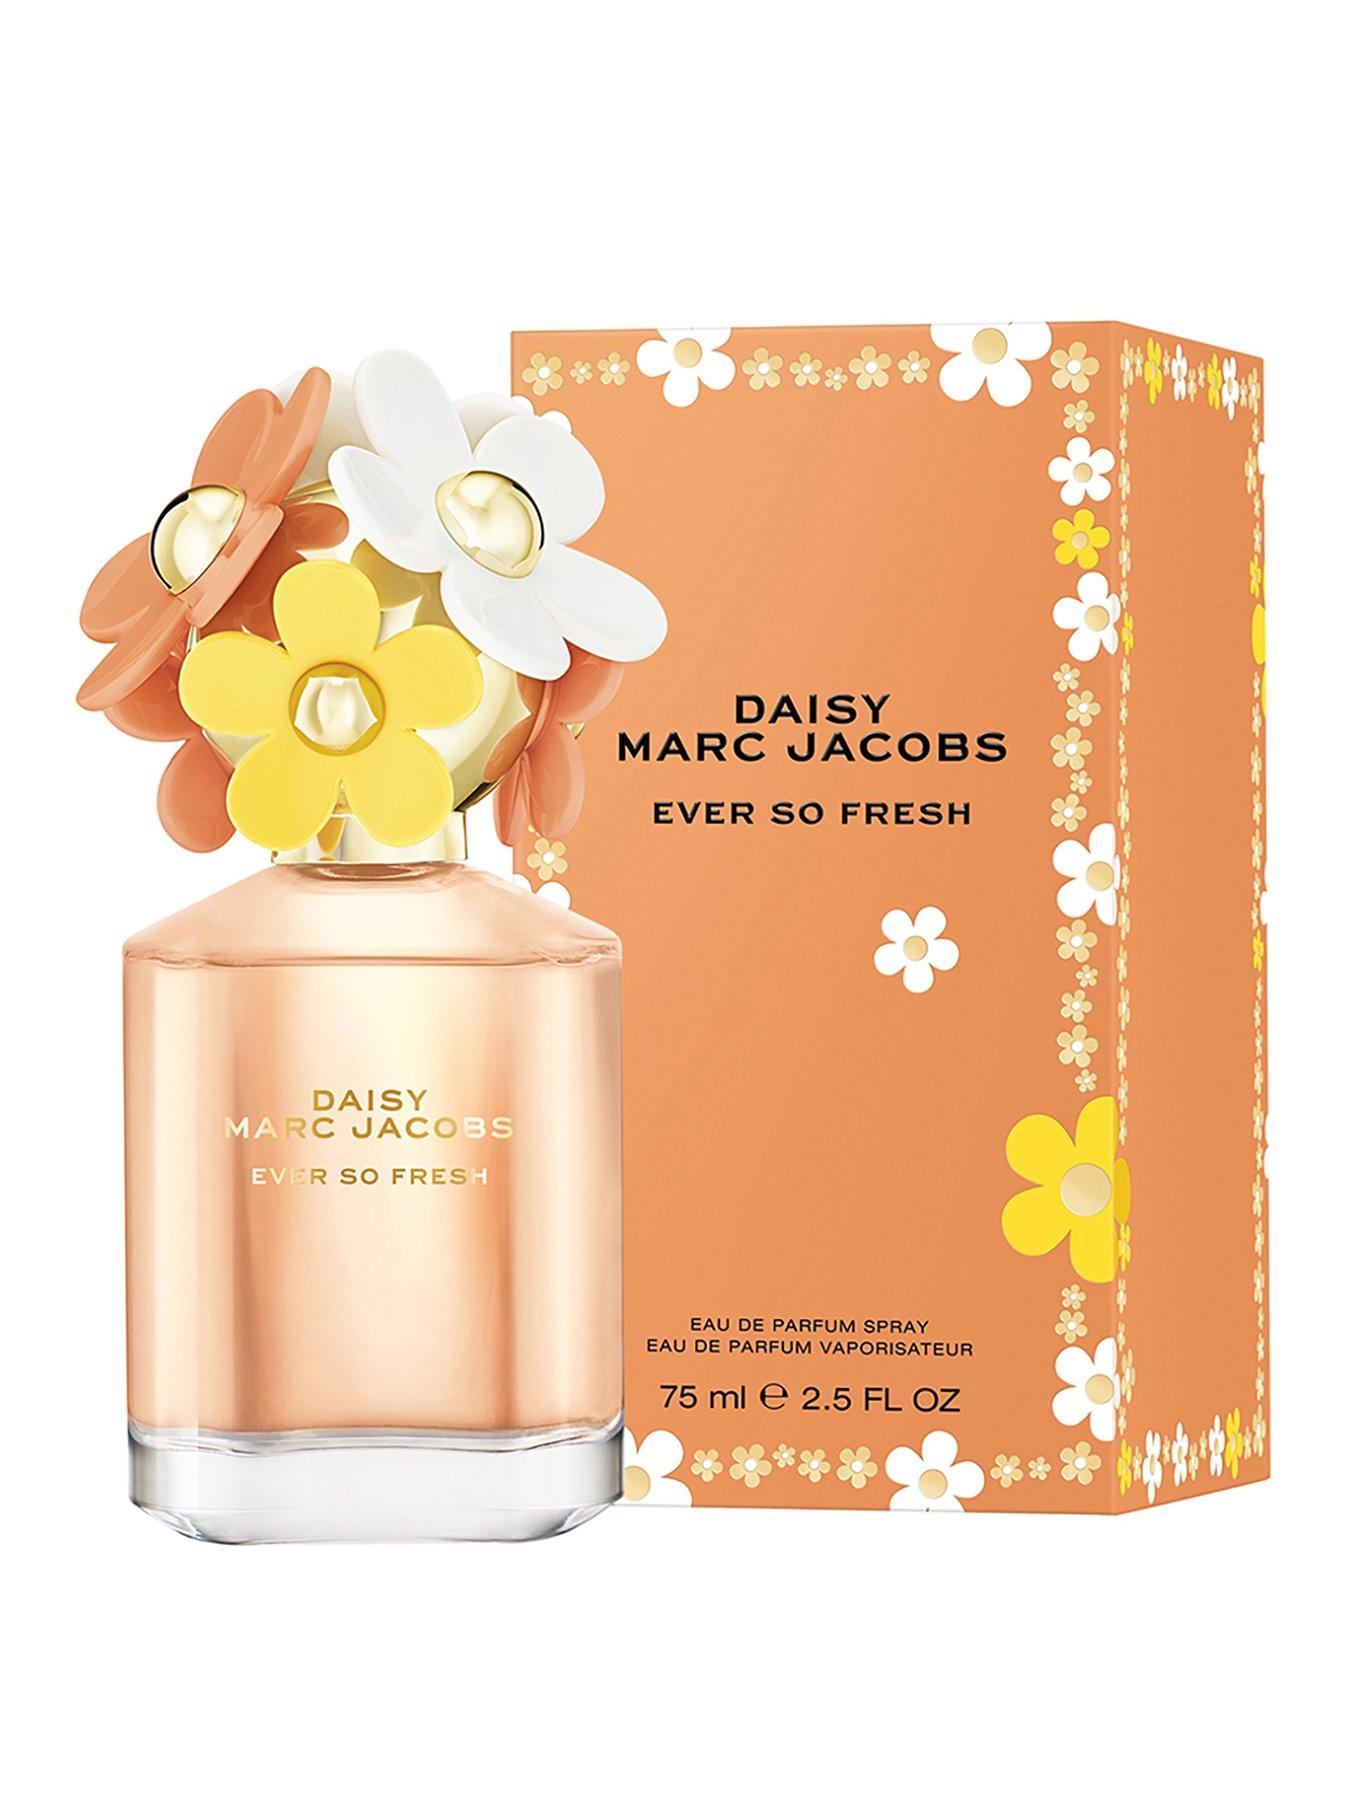 MARC JACOBS Daisy Ever So Fresh 75ml Eau de Parfum | Very.co.uk